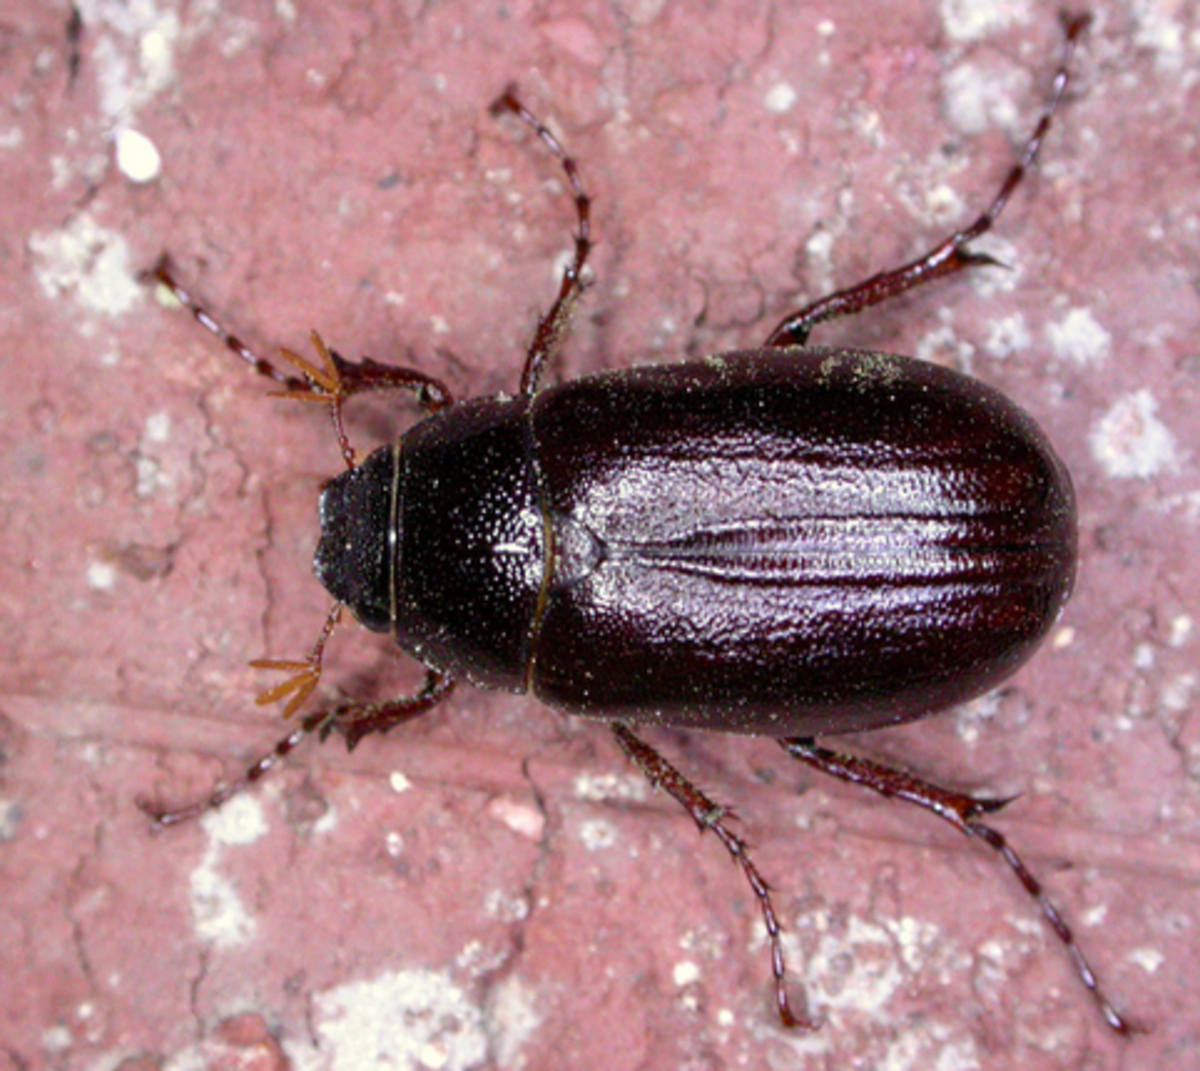 Adult "June Bug" Beetle